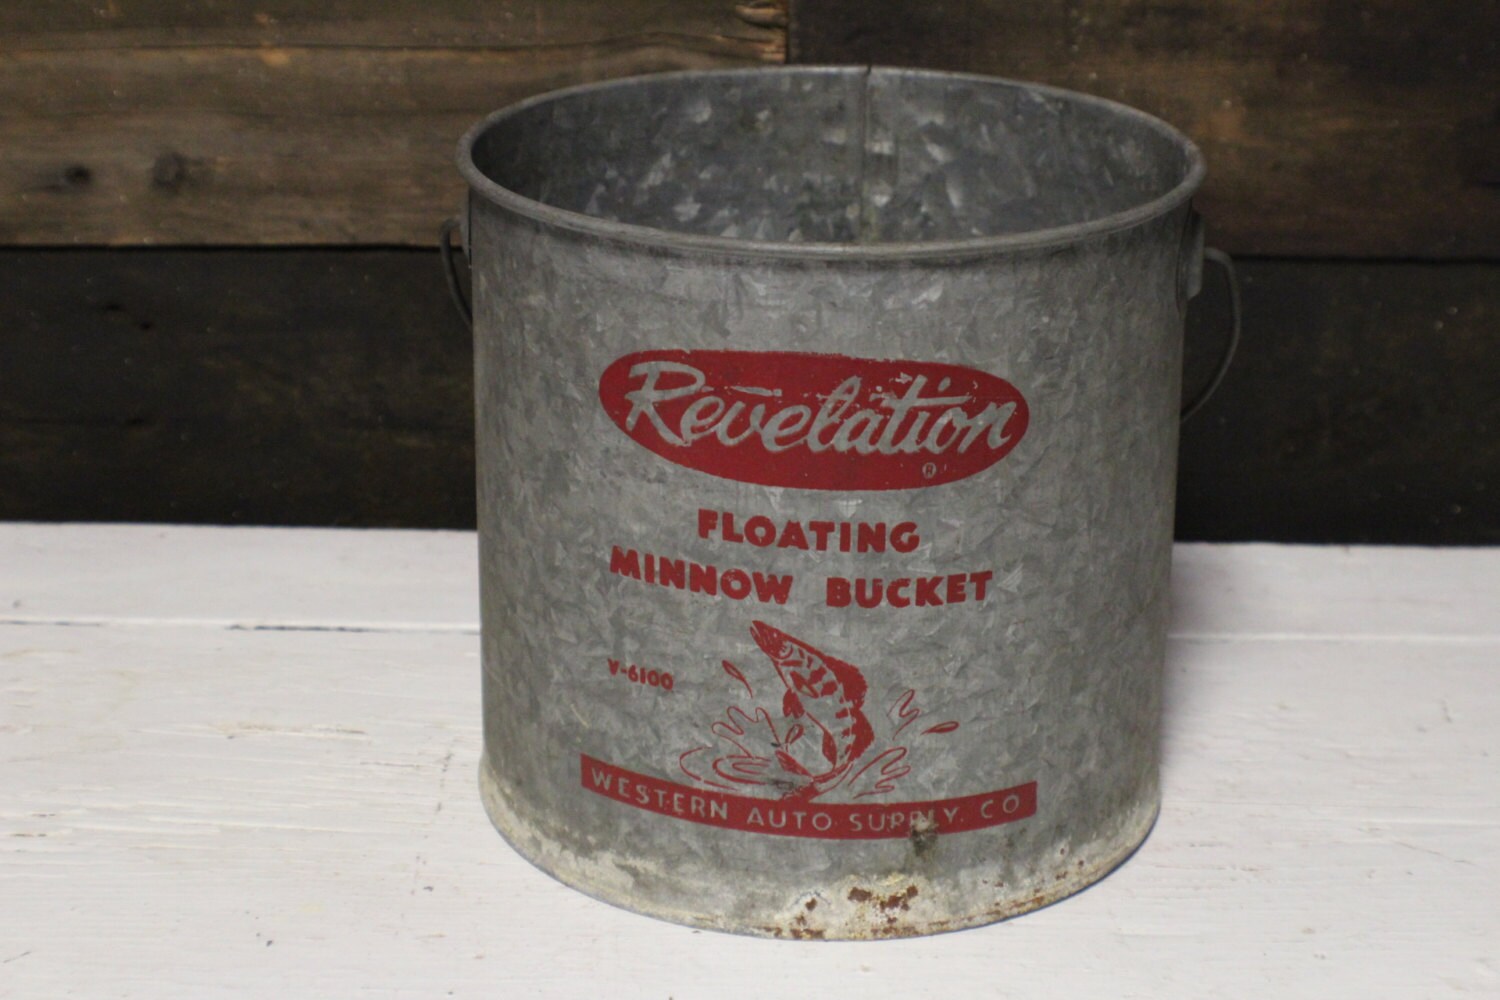 Revelation Floating Minnow Bucket Vintage Galvanized Bucket